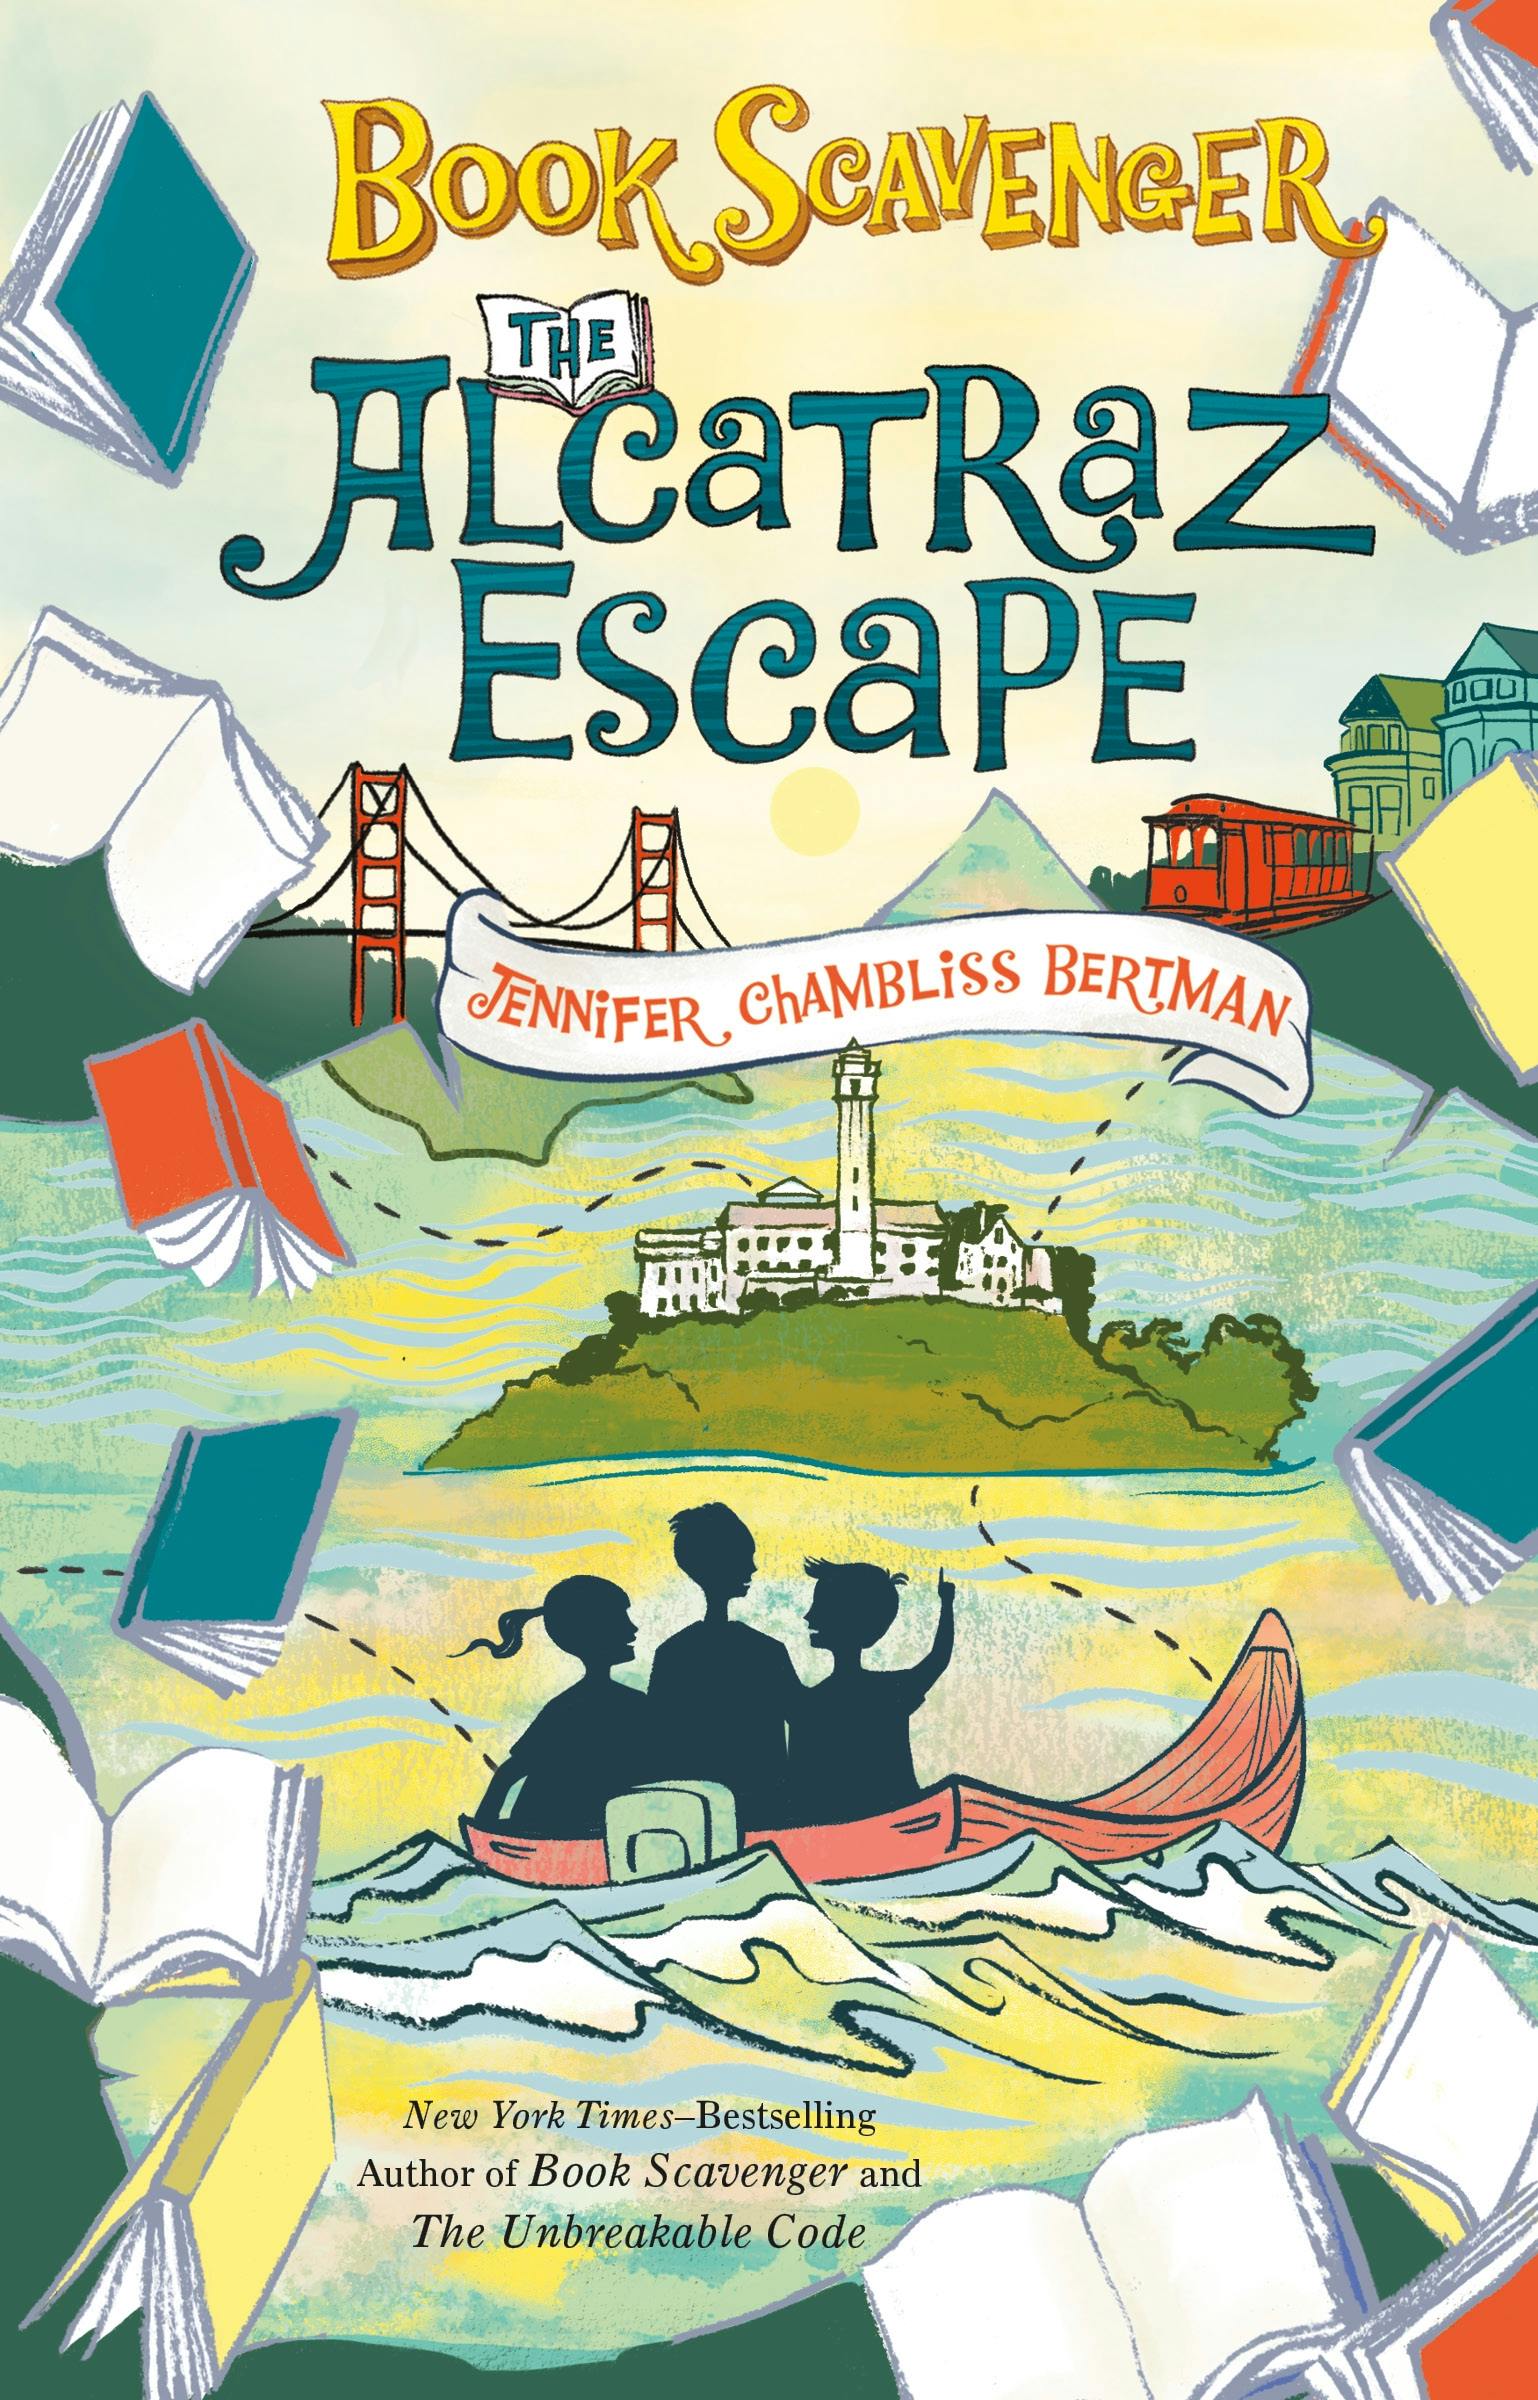 Alcatraz - Epic Games Store